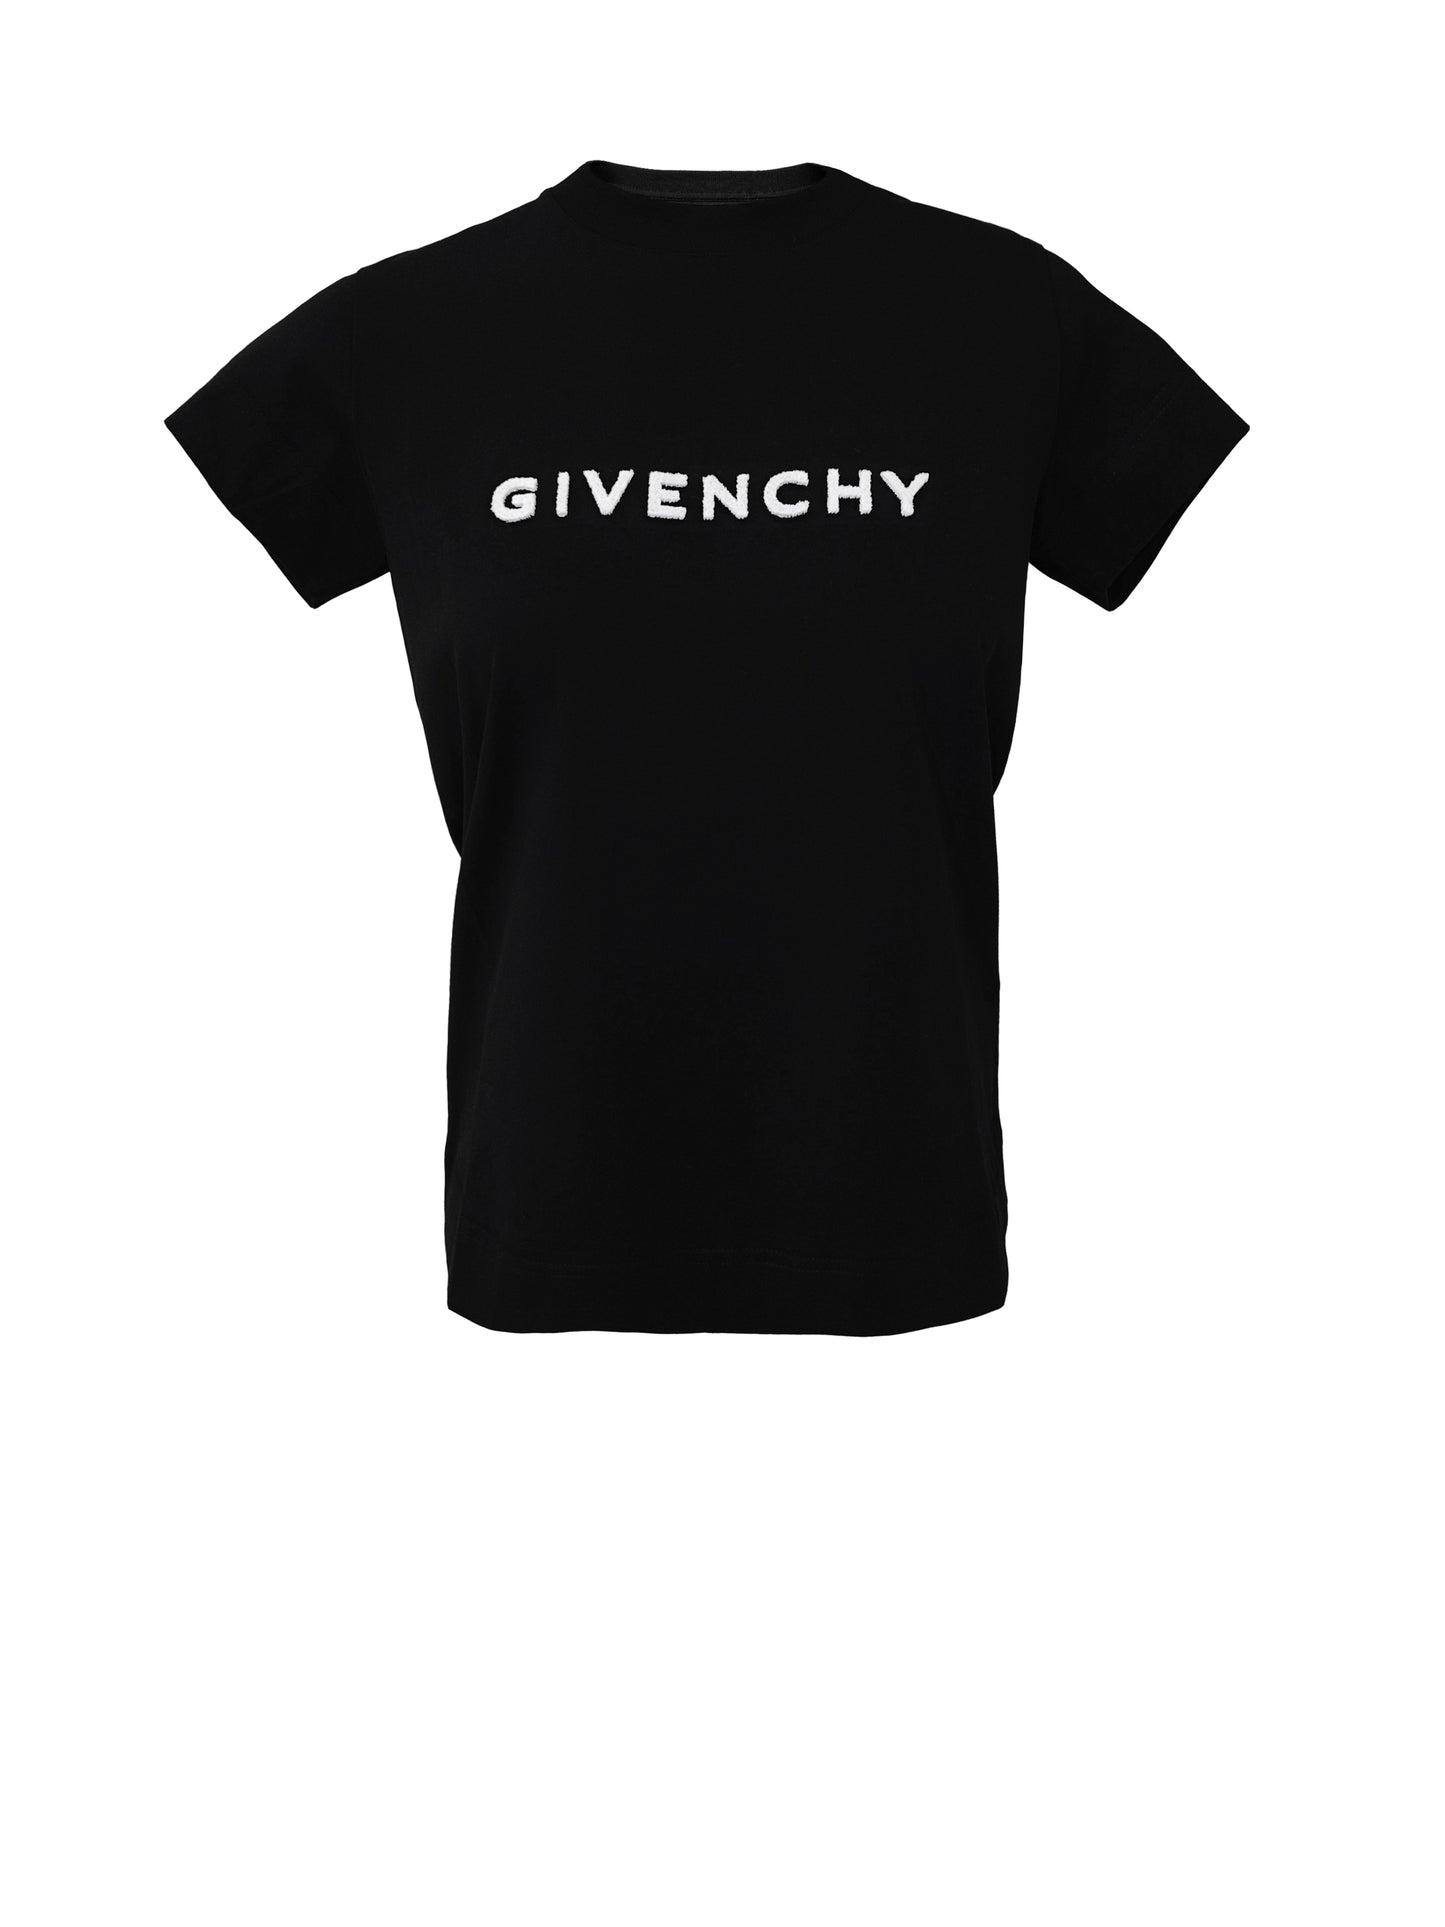 Givenchy T-Shirt Schwarz